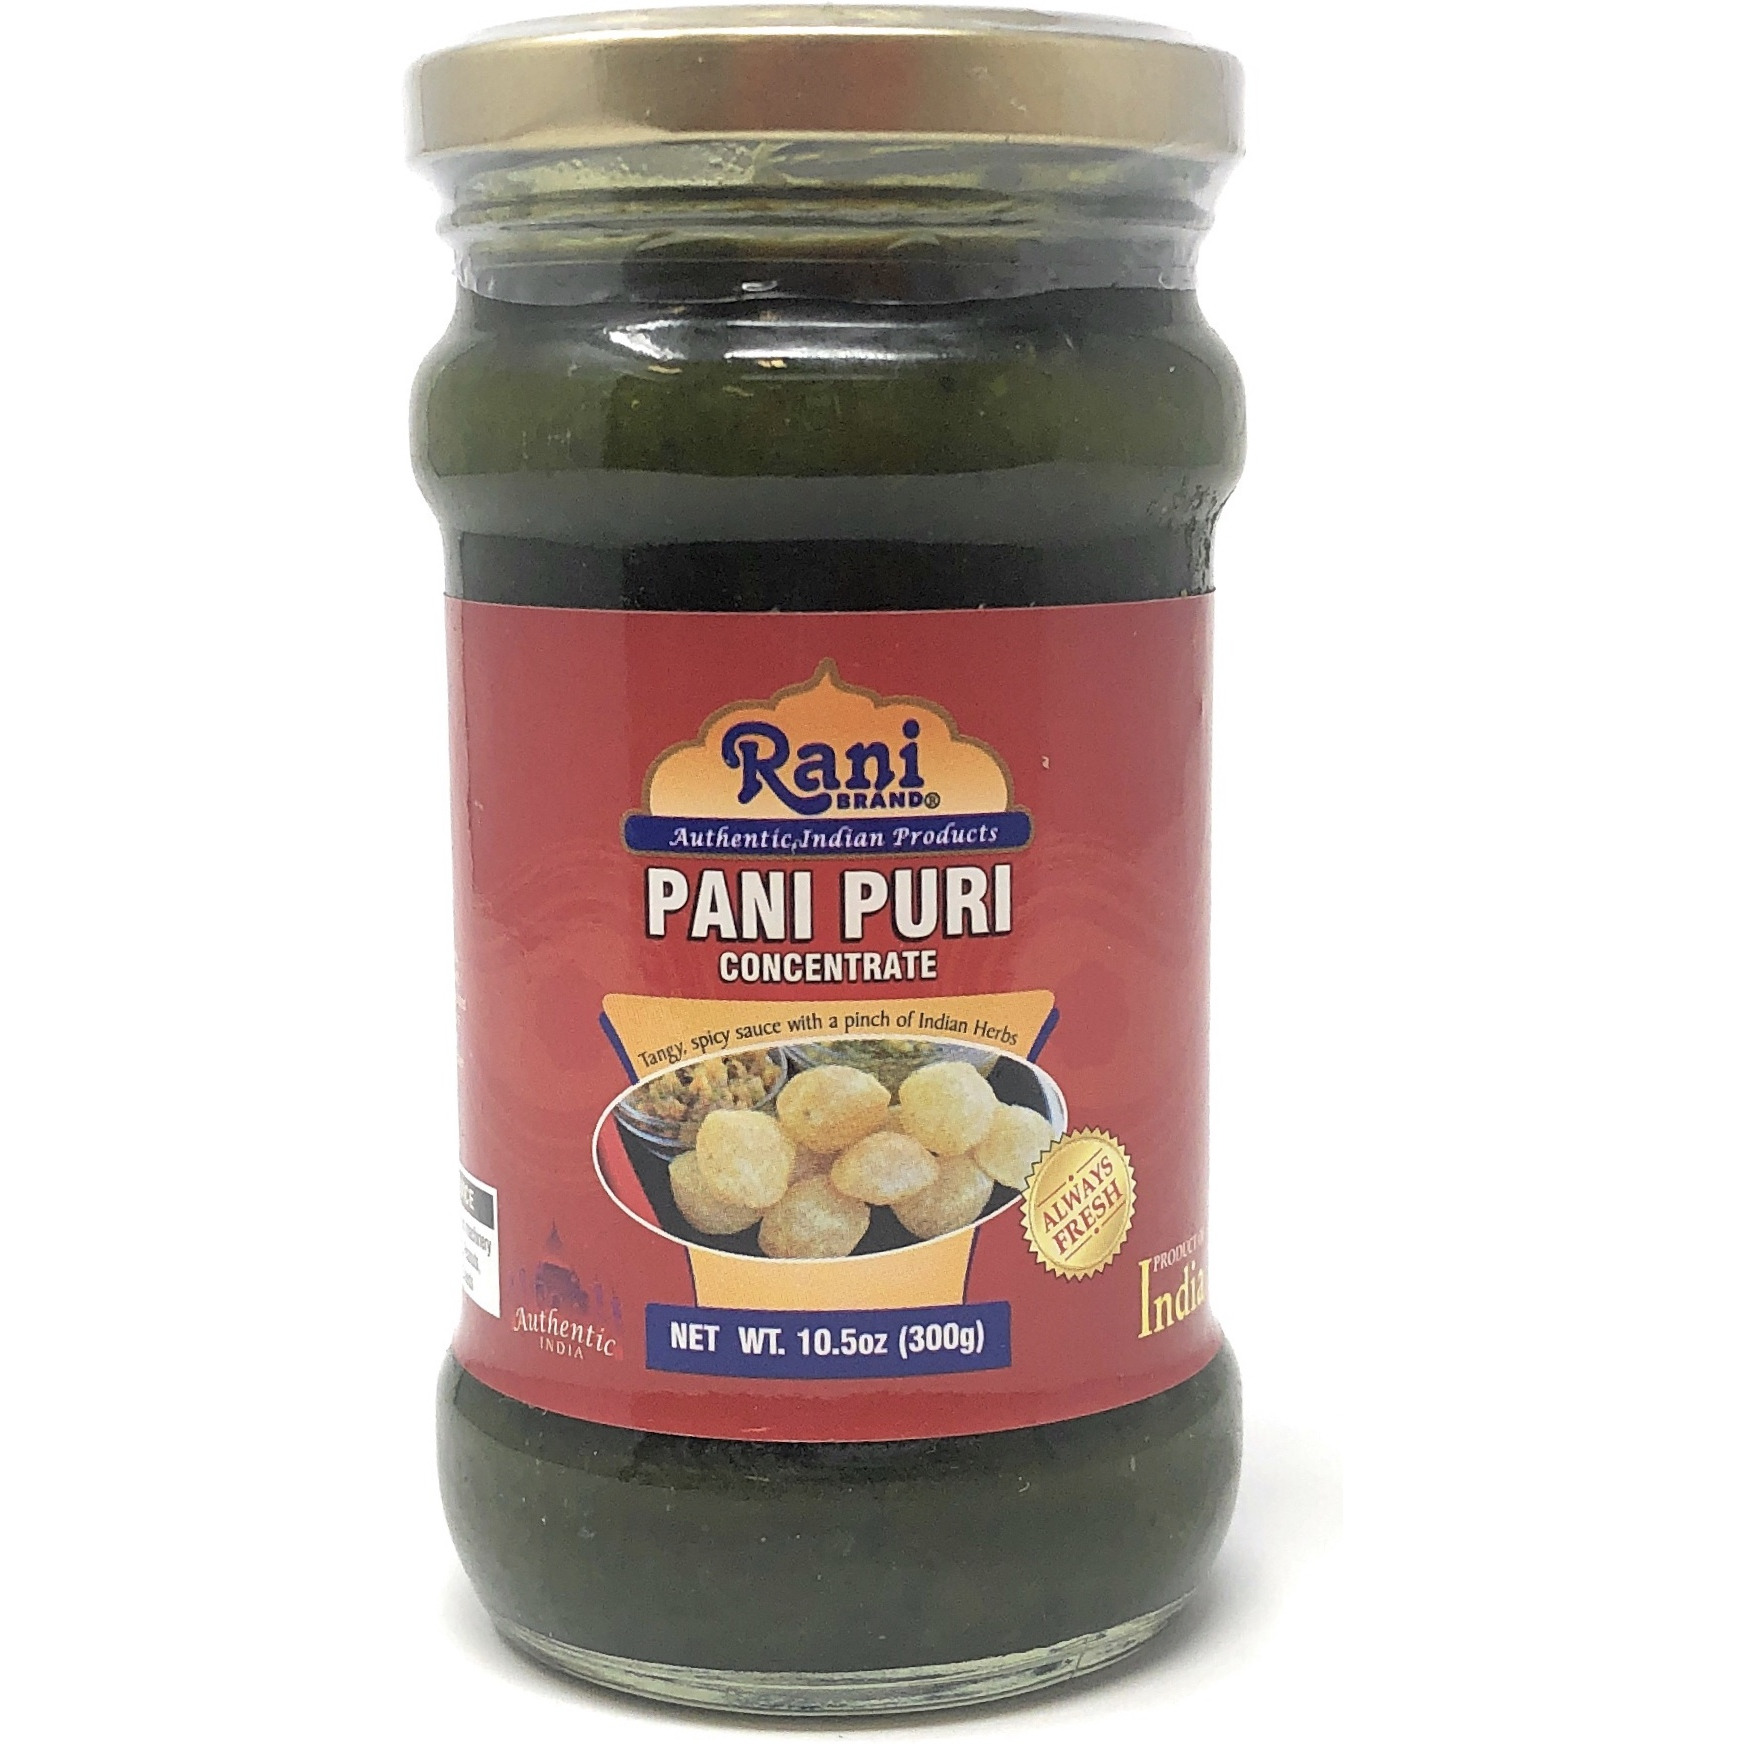 Rani Pani Puri Concentrate (Sweet & Spicy to make Pani Water / Spicy Water), Glass Jar, Ready to eat 10.5oz (300g) Vegan ~ Gluten Friendly | NON-GMO | Indian Origin